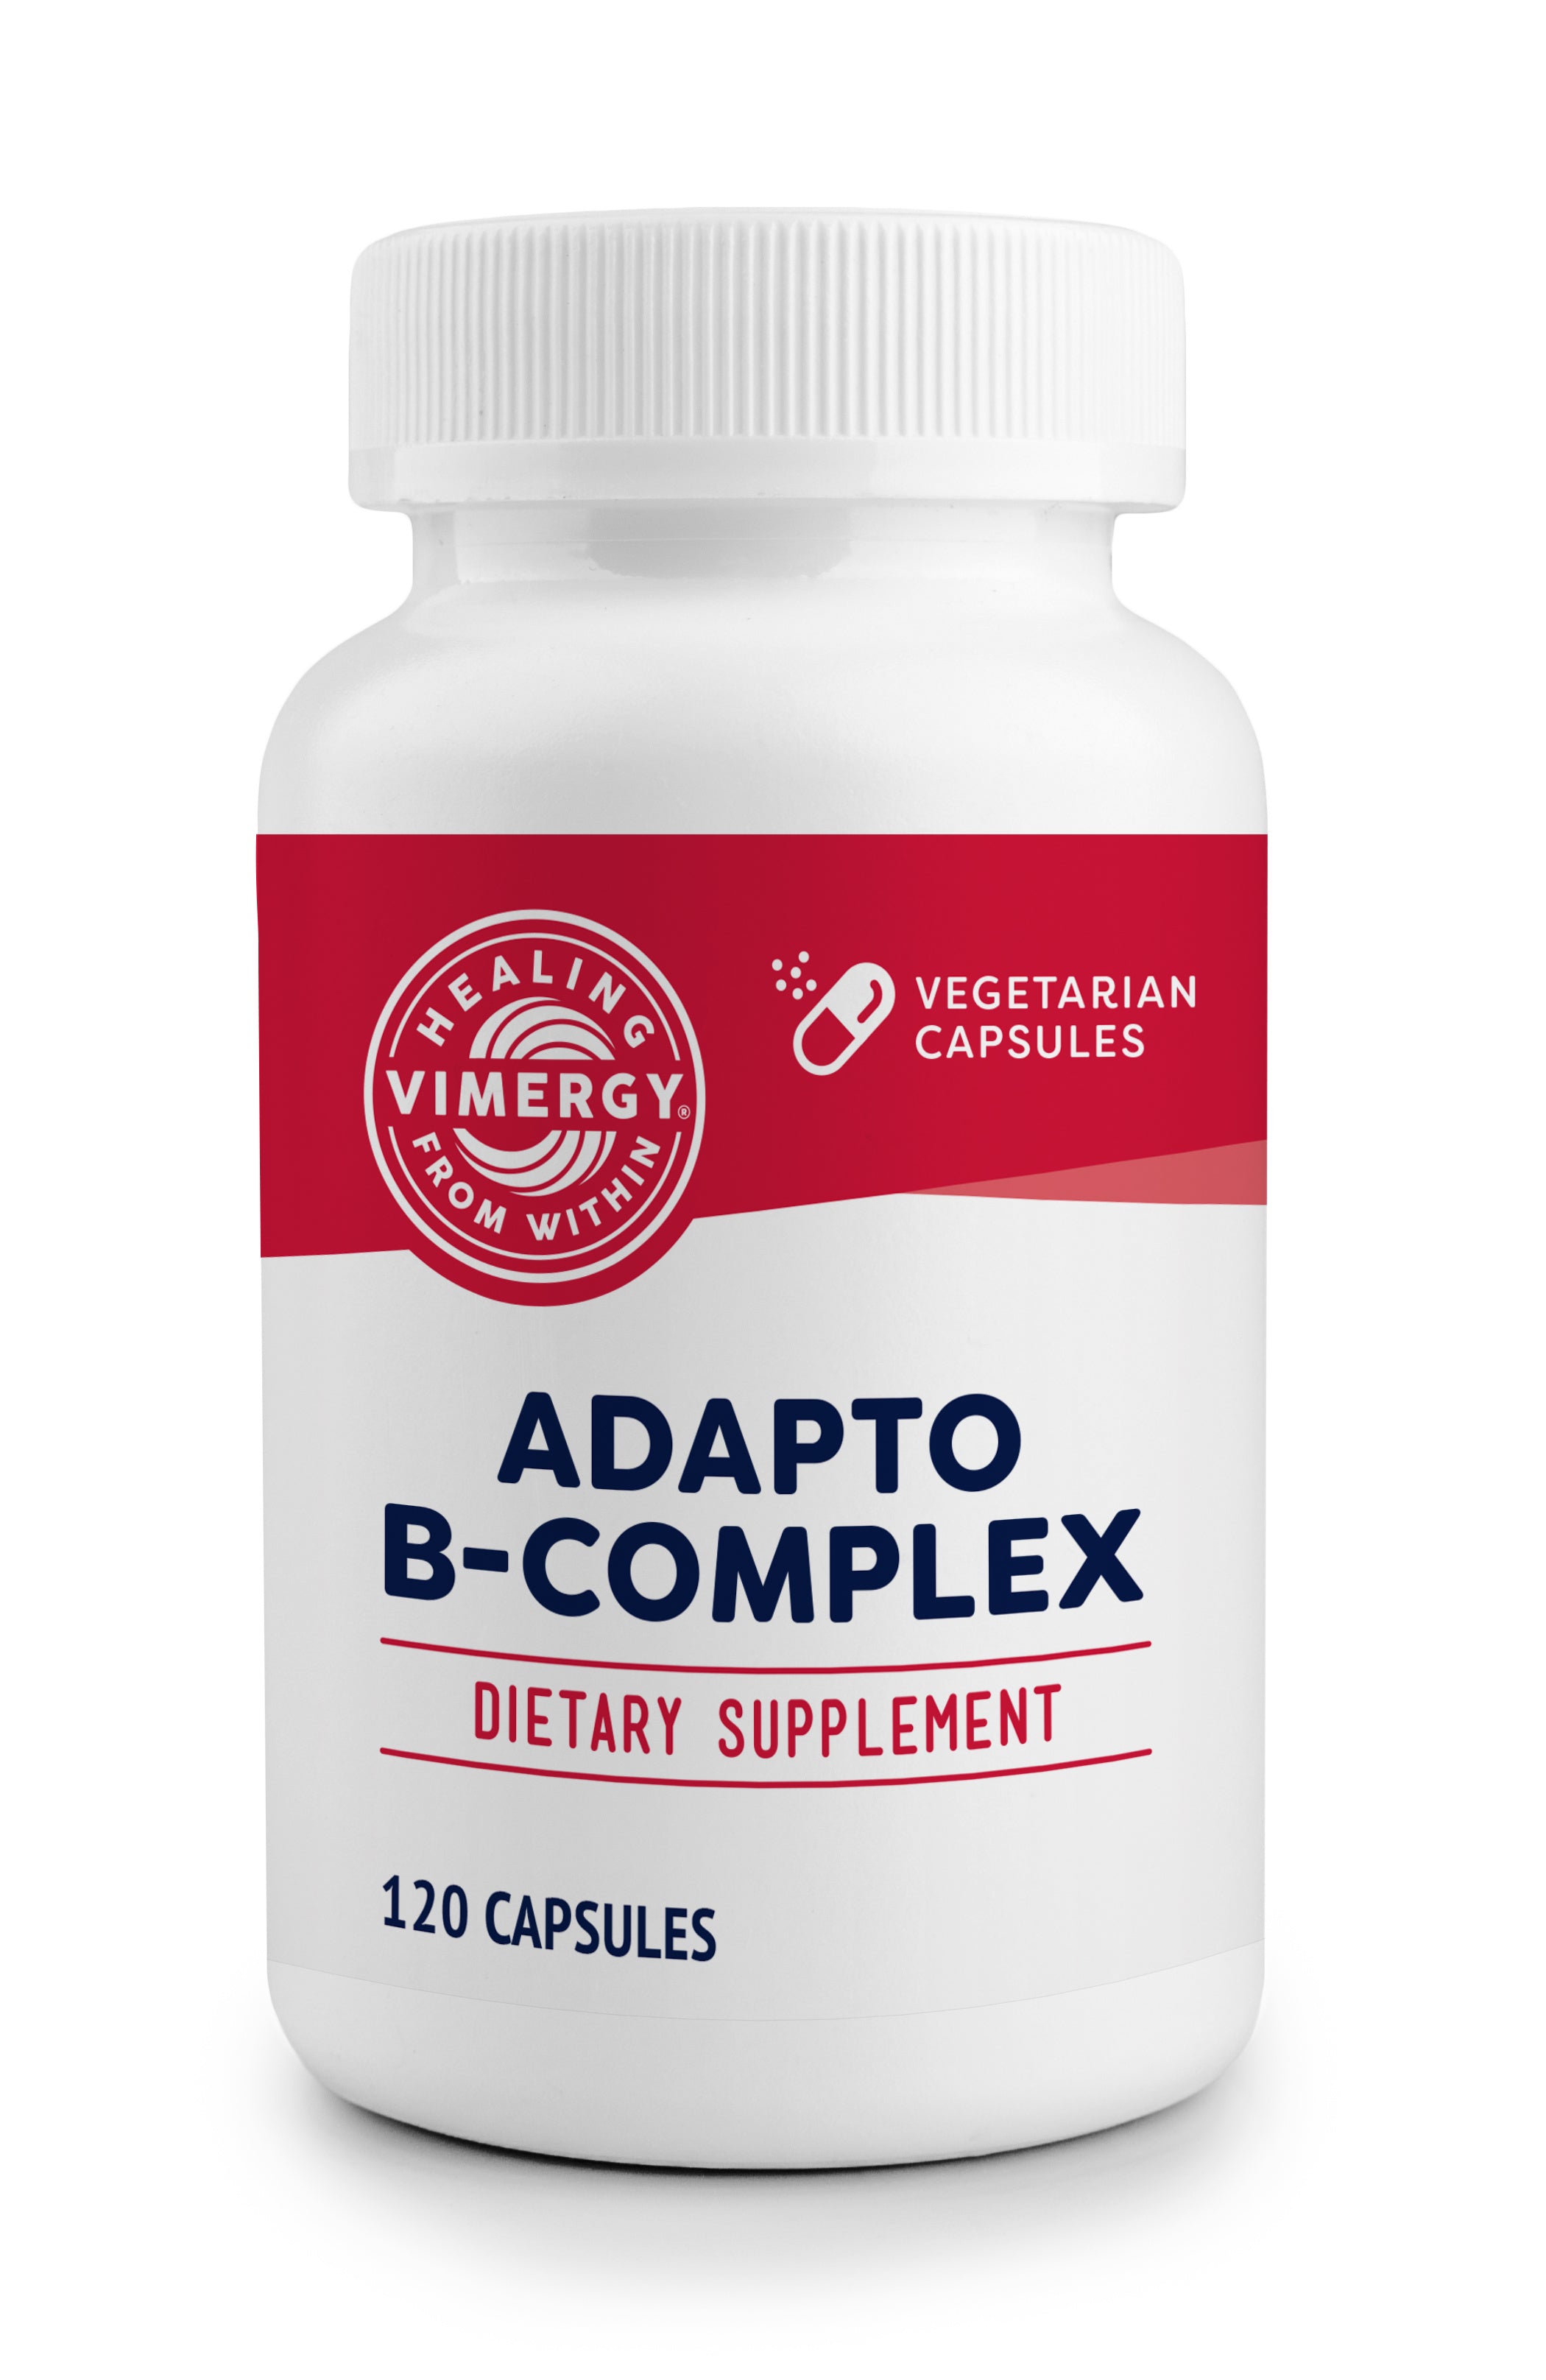 Vimergy Adapto B-Complex